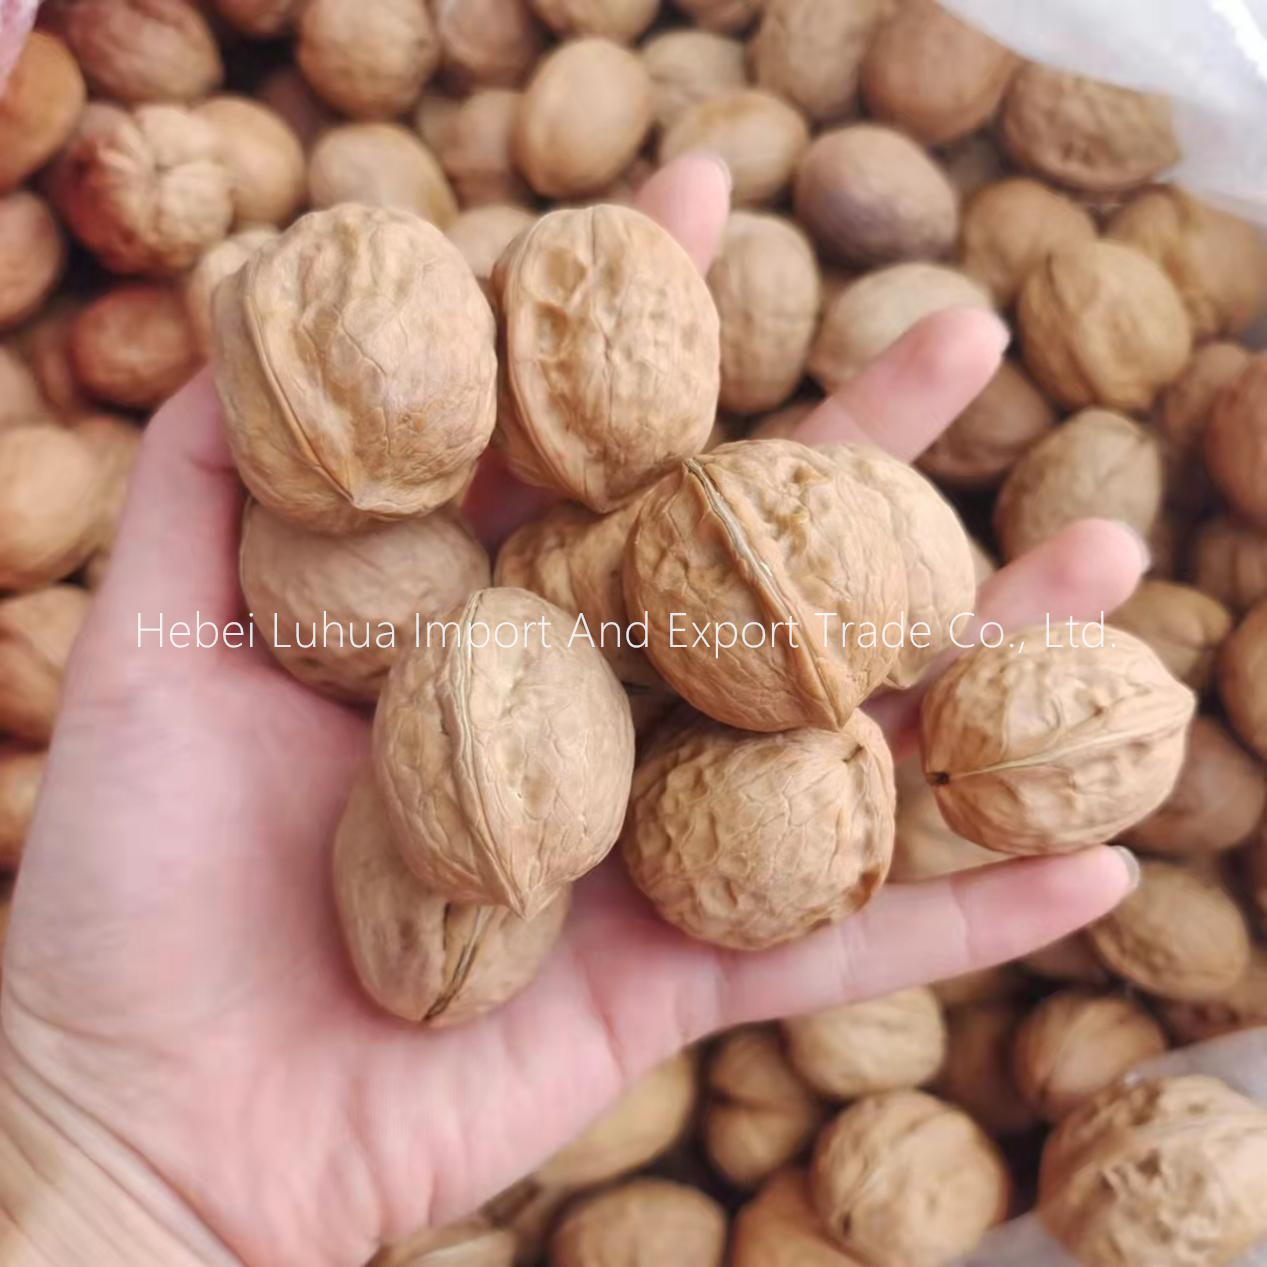 Xinjiang walnut xinfeng වර්ගයේ walnuts කවචයේ